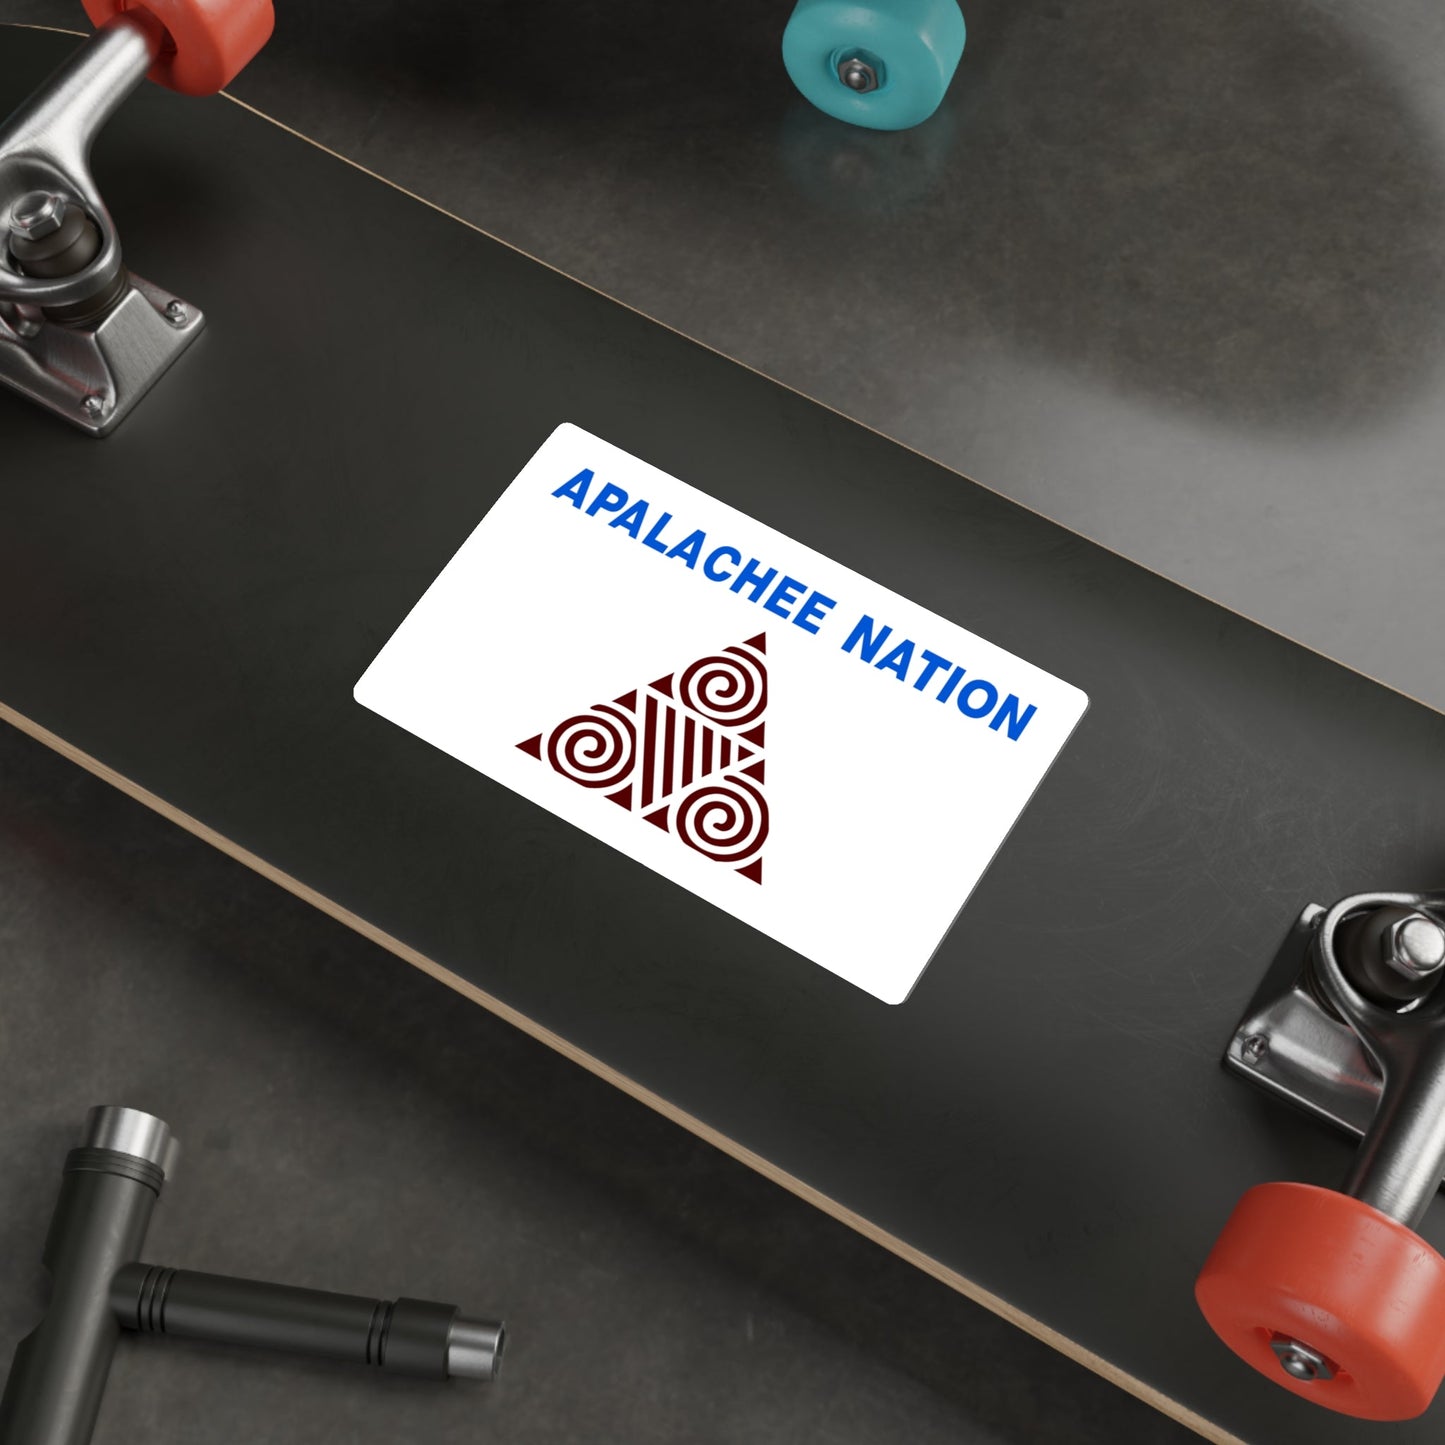 Apalachee Nation Flag STICKER Vinyl Die-Cut Decal-The Sticker Space